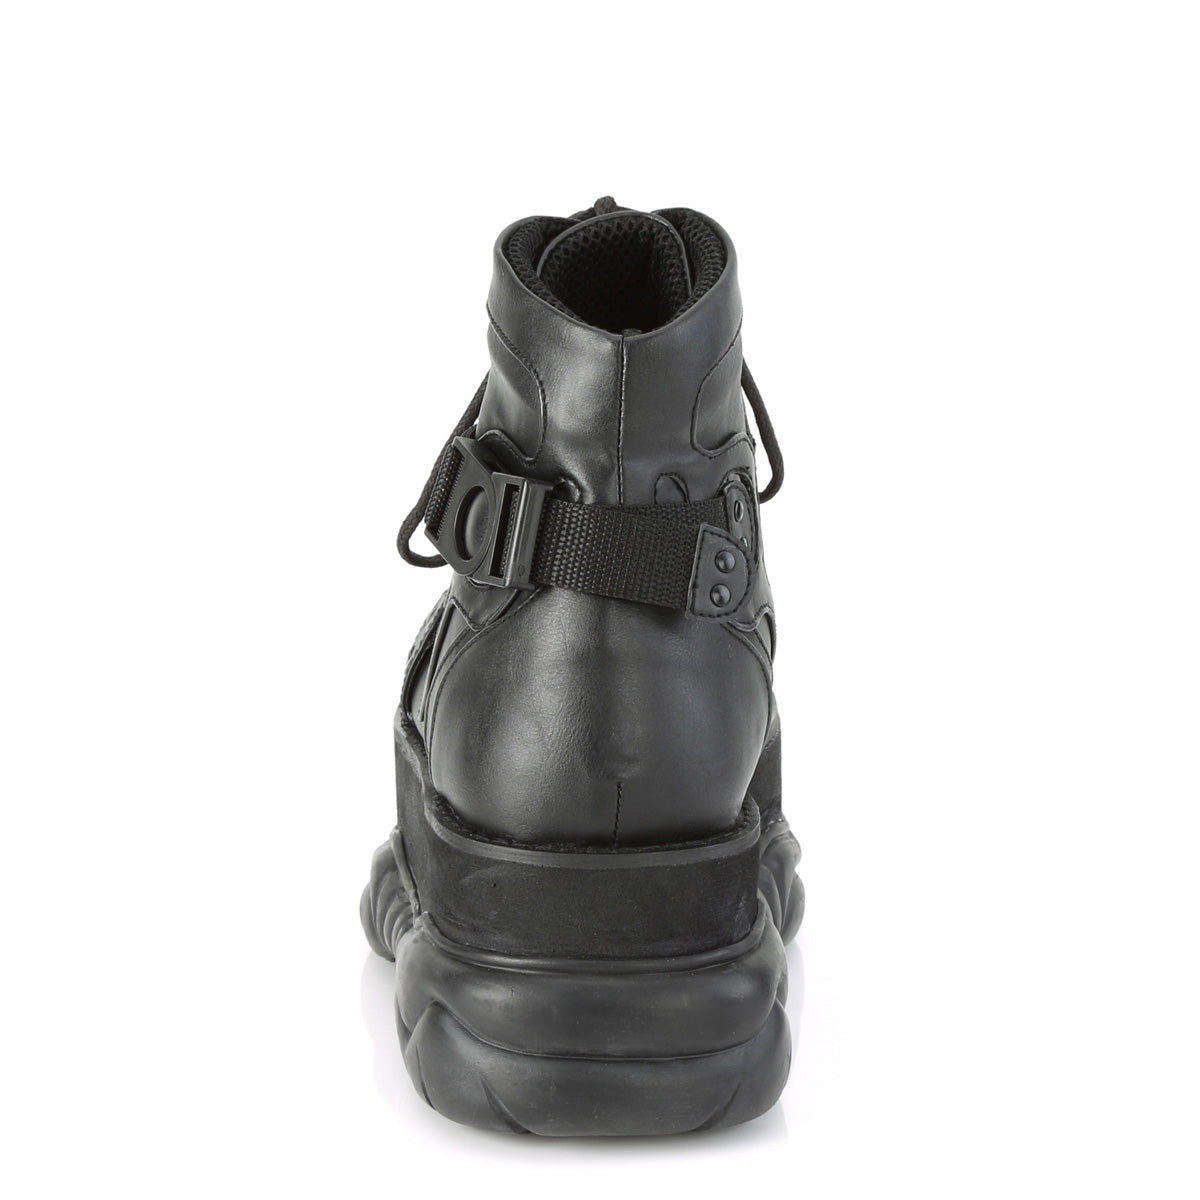 NEPTUNE-181 Black Vegan Leather Ankle Boot Demonia